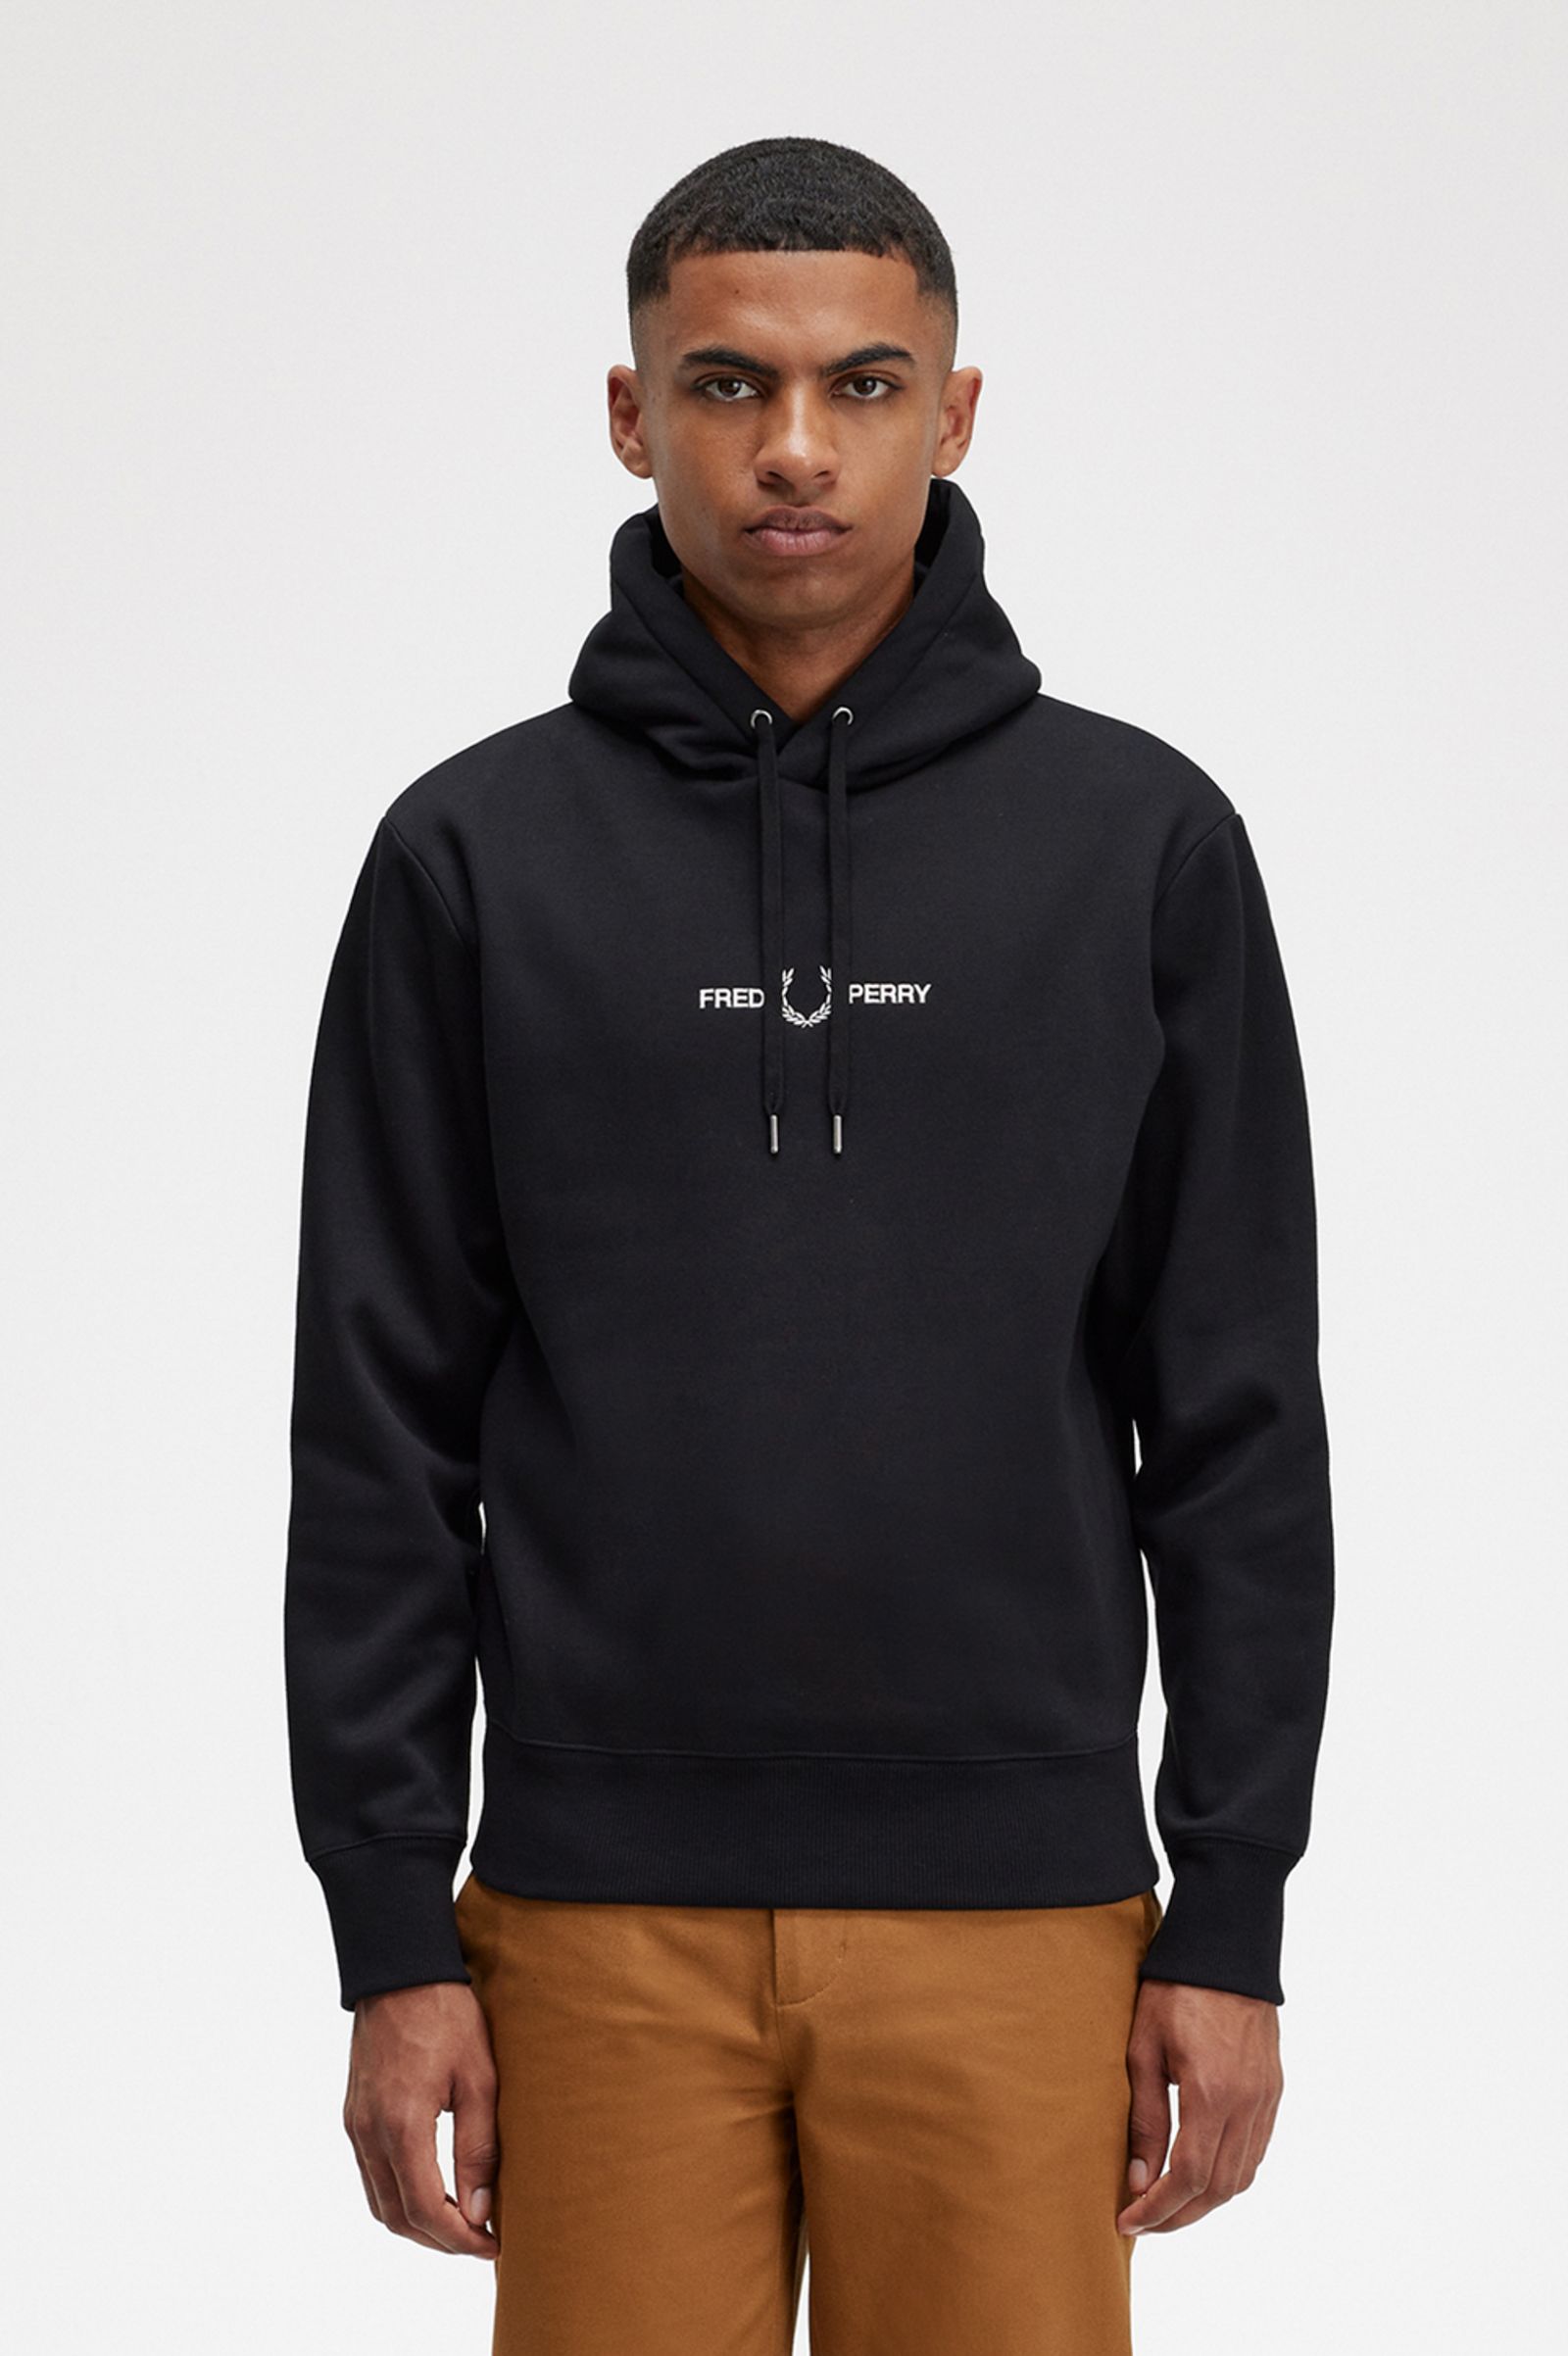 Embroidered Hooded Sweatshirt - Black, Men's Sweatshirts, Sports Inspired  Hoodies & Sweatshirts